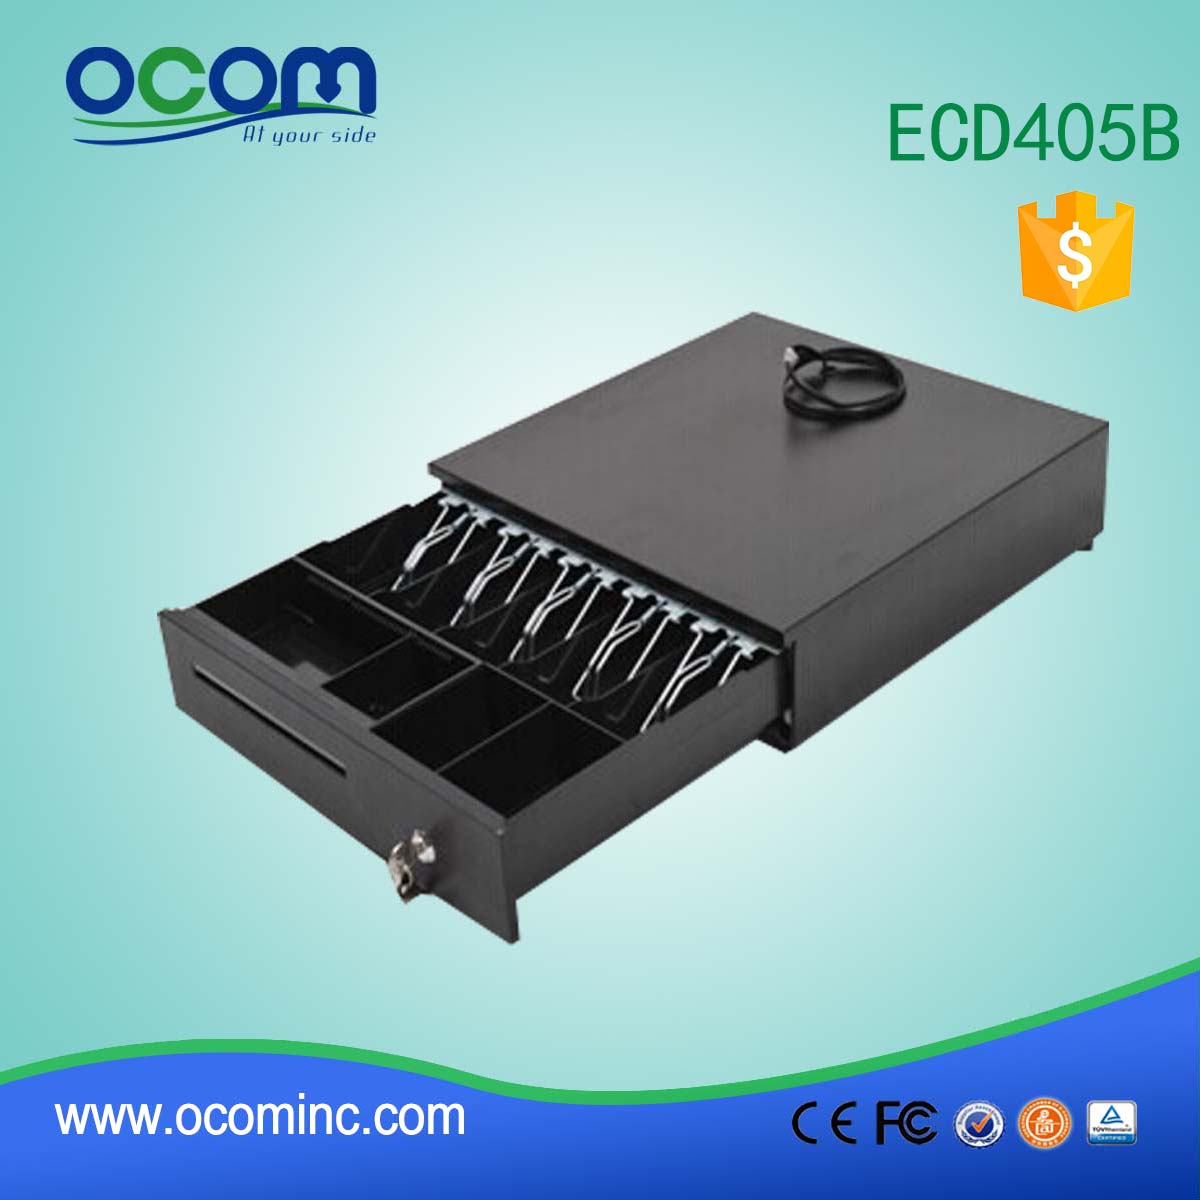 ECD405B Metal Cash Drawer 5 adjustable Bill holders and 4 Coins holders